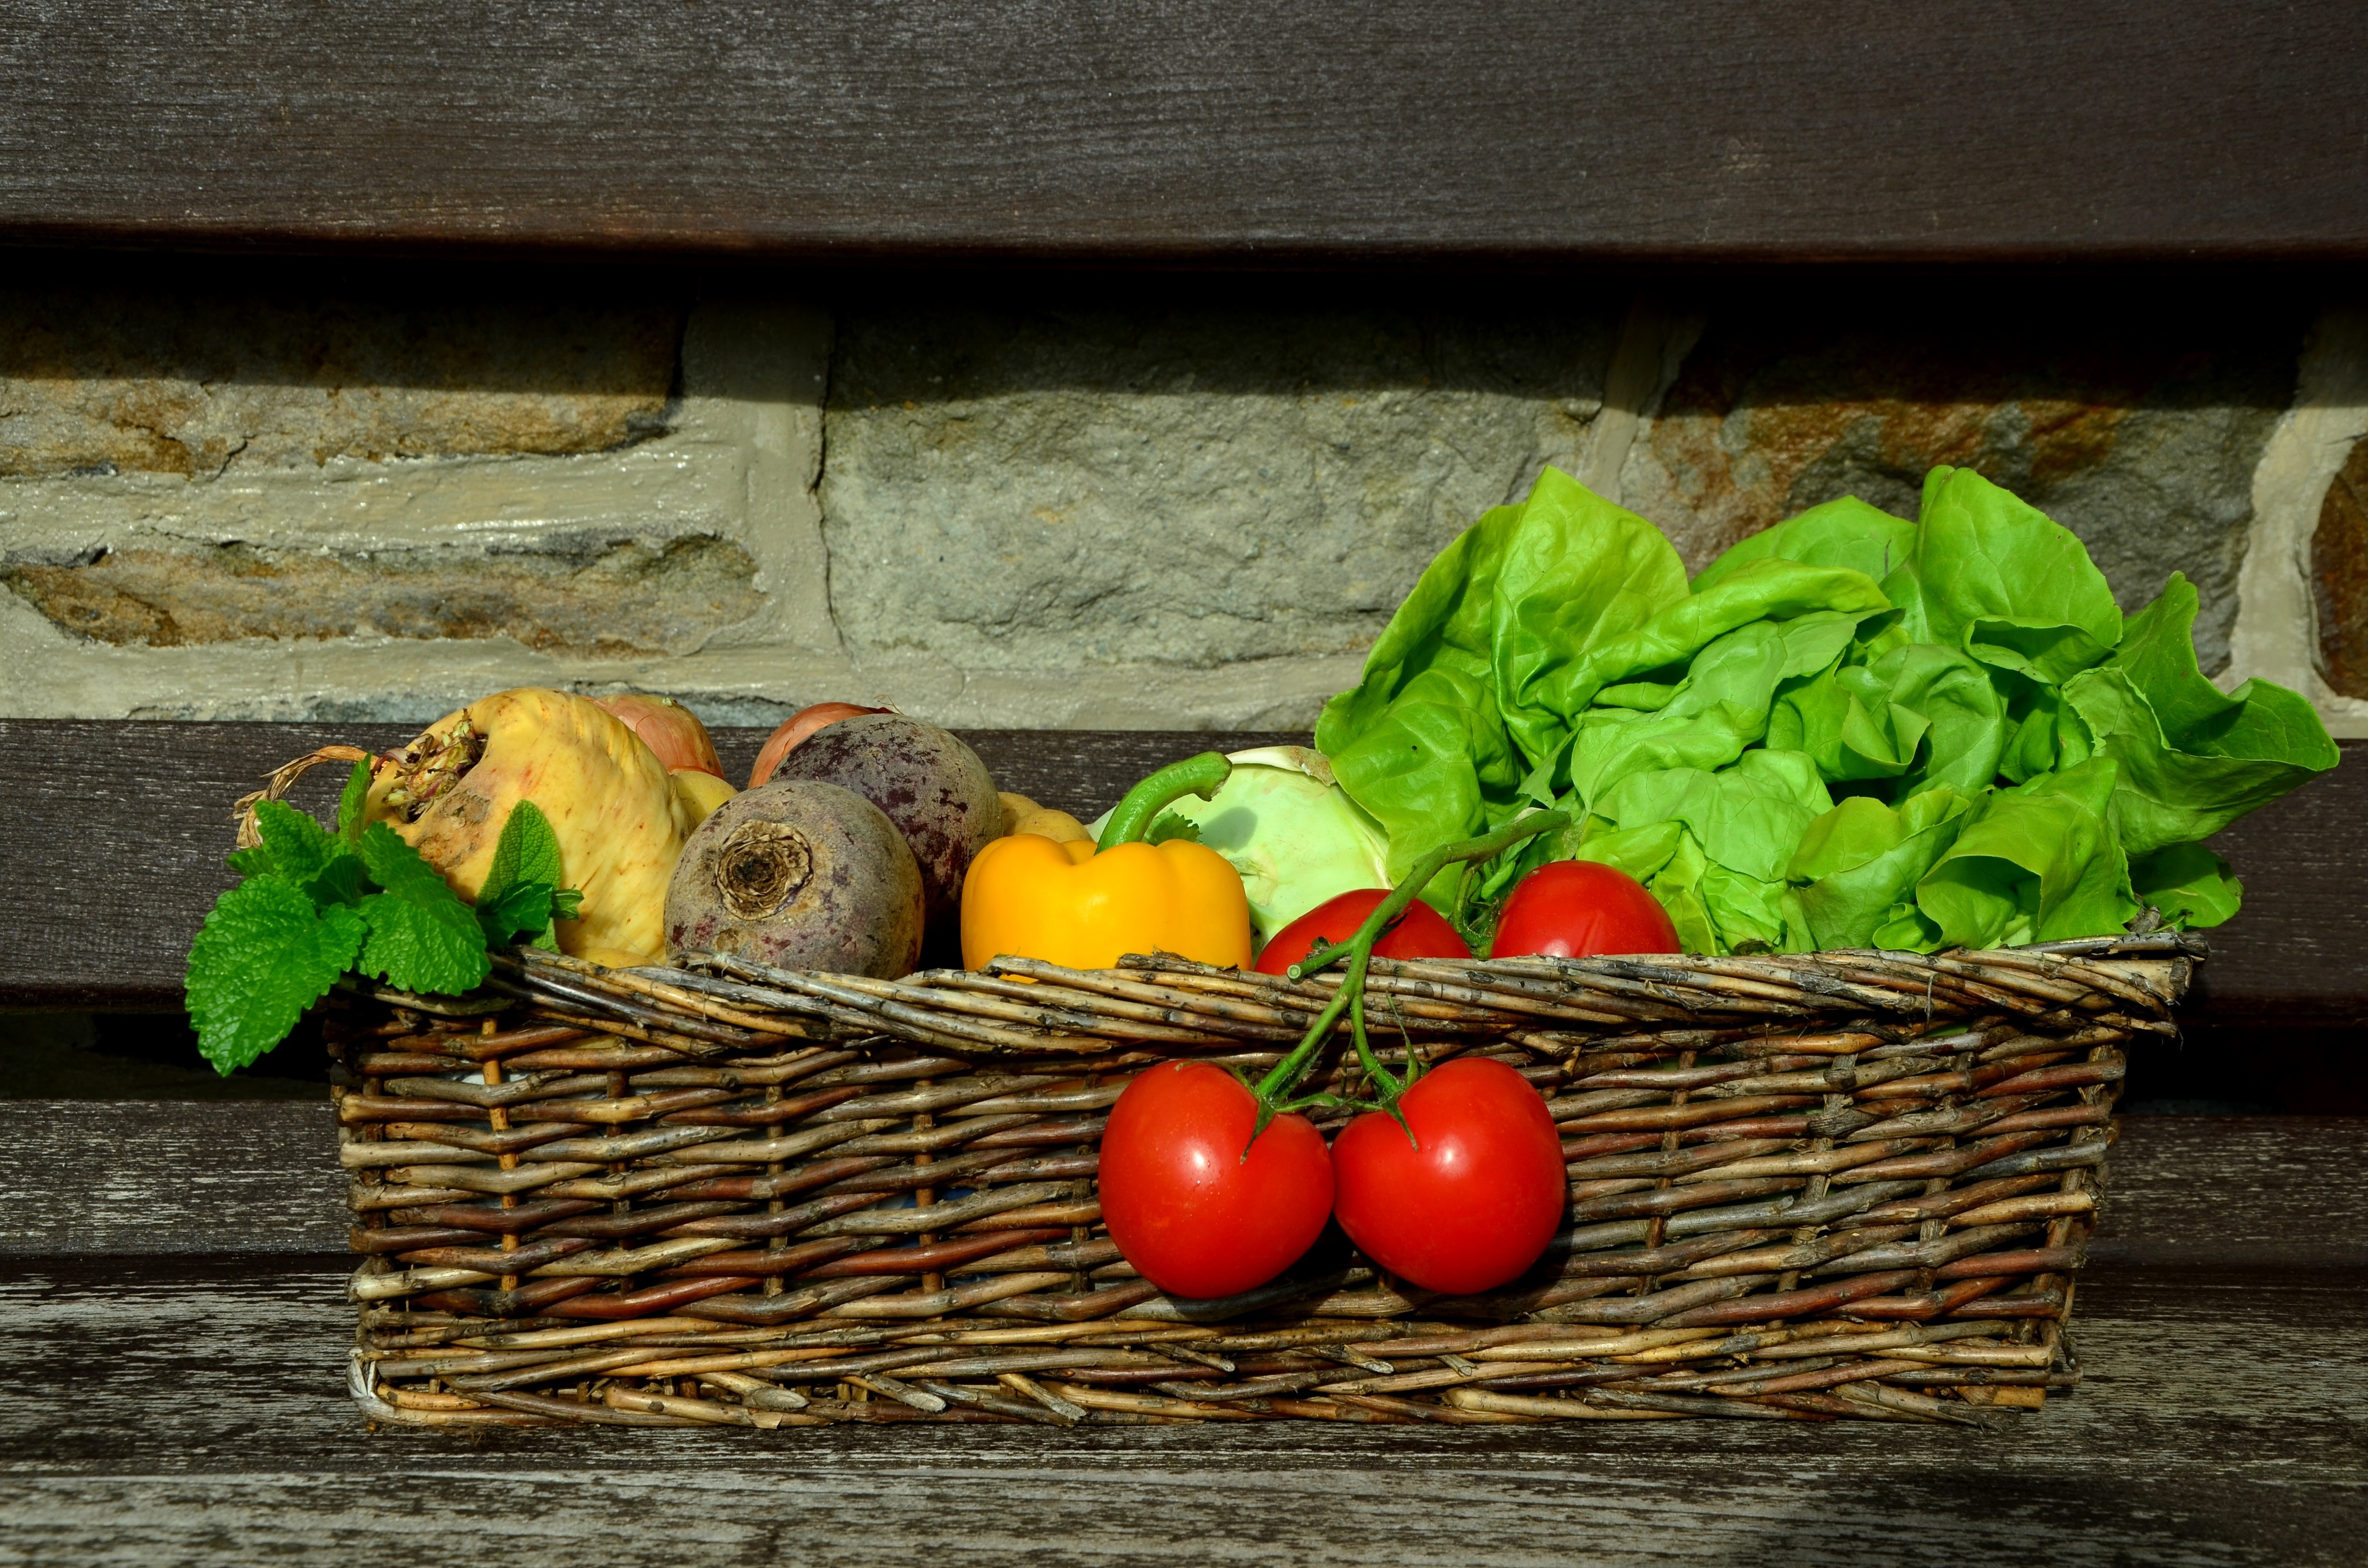 Vegetables, Salad, Tomatoes, vegetable, food and drink